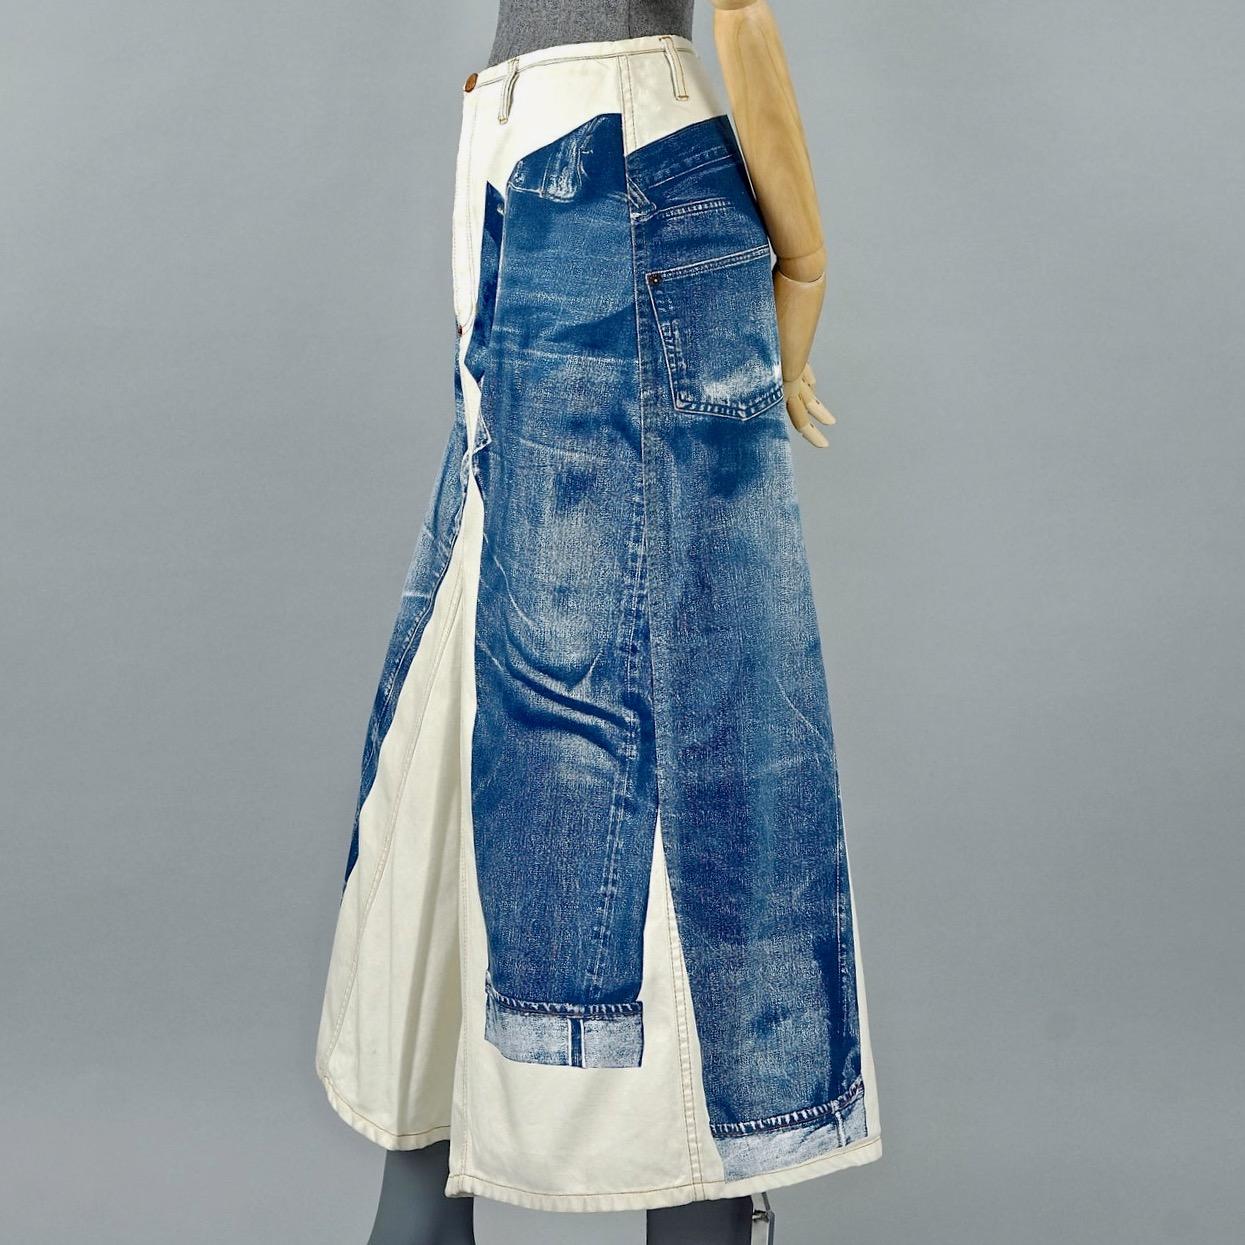 jean paul gaultier skirt vintage